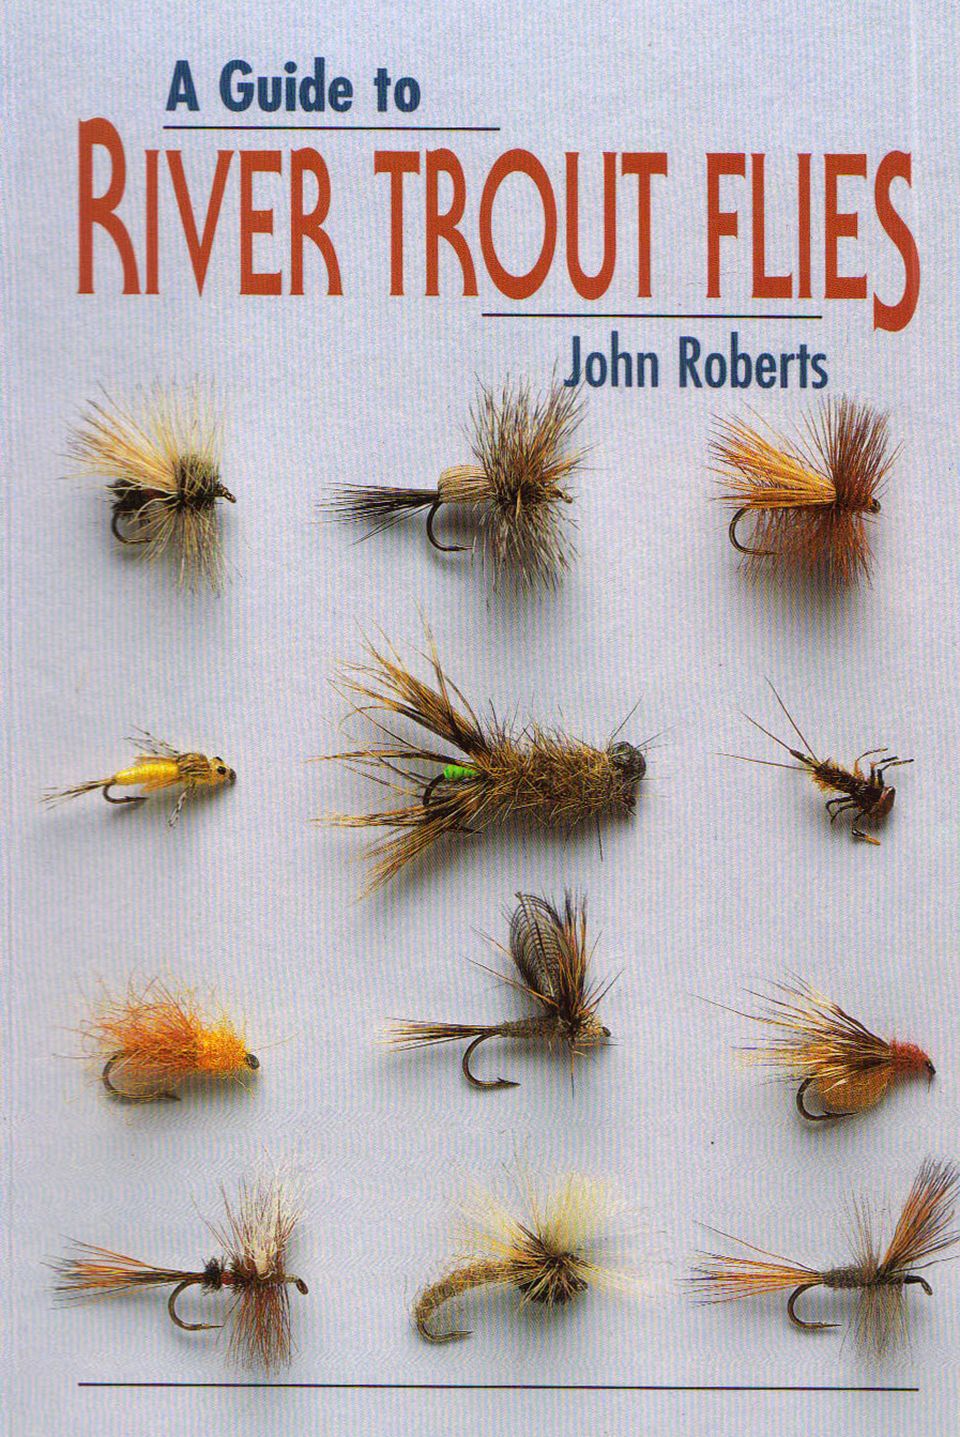 A GUIDE TO RIVER TROUT FLIES. By John Roberts. - Roberts (John).